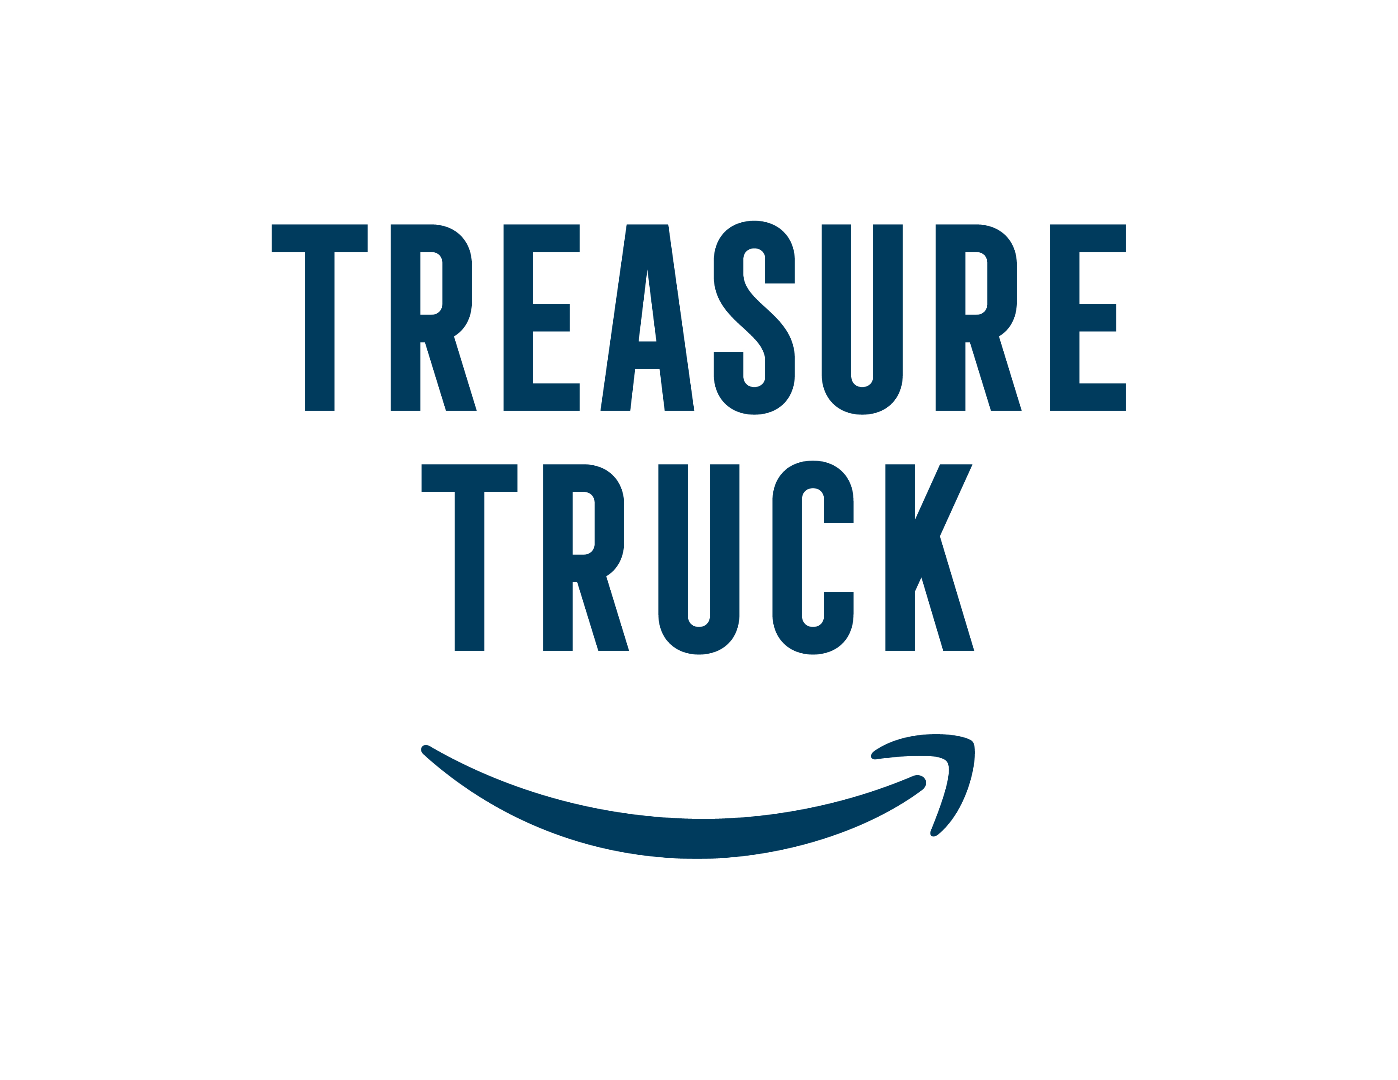 Amazon S Treasure Truck Electric Beauty Pop Up Dallas Tour Fort Worth Magazine